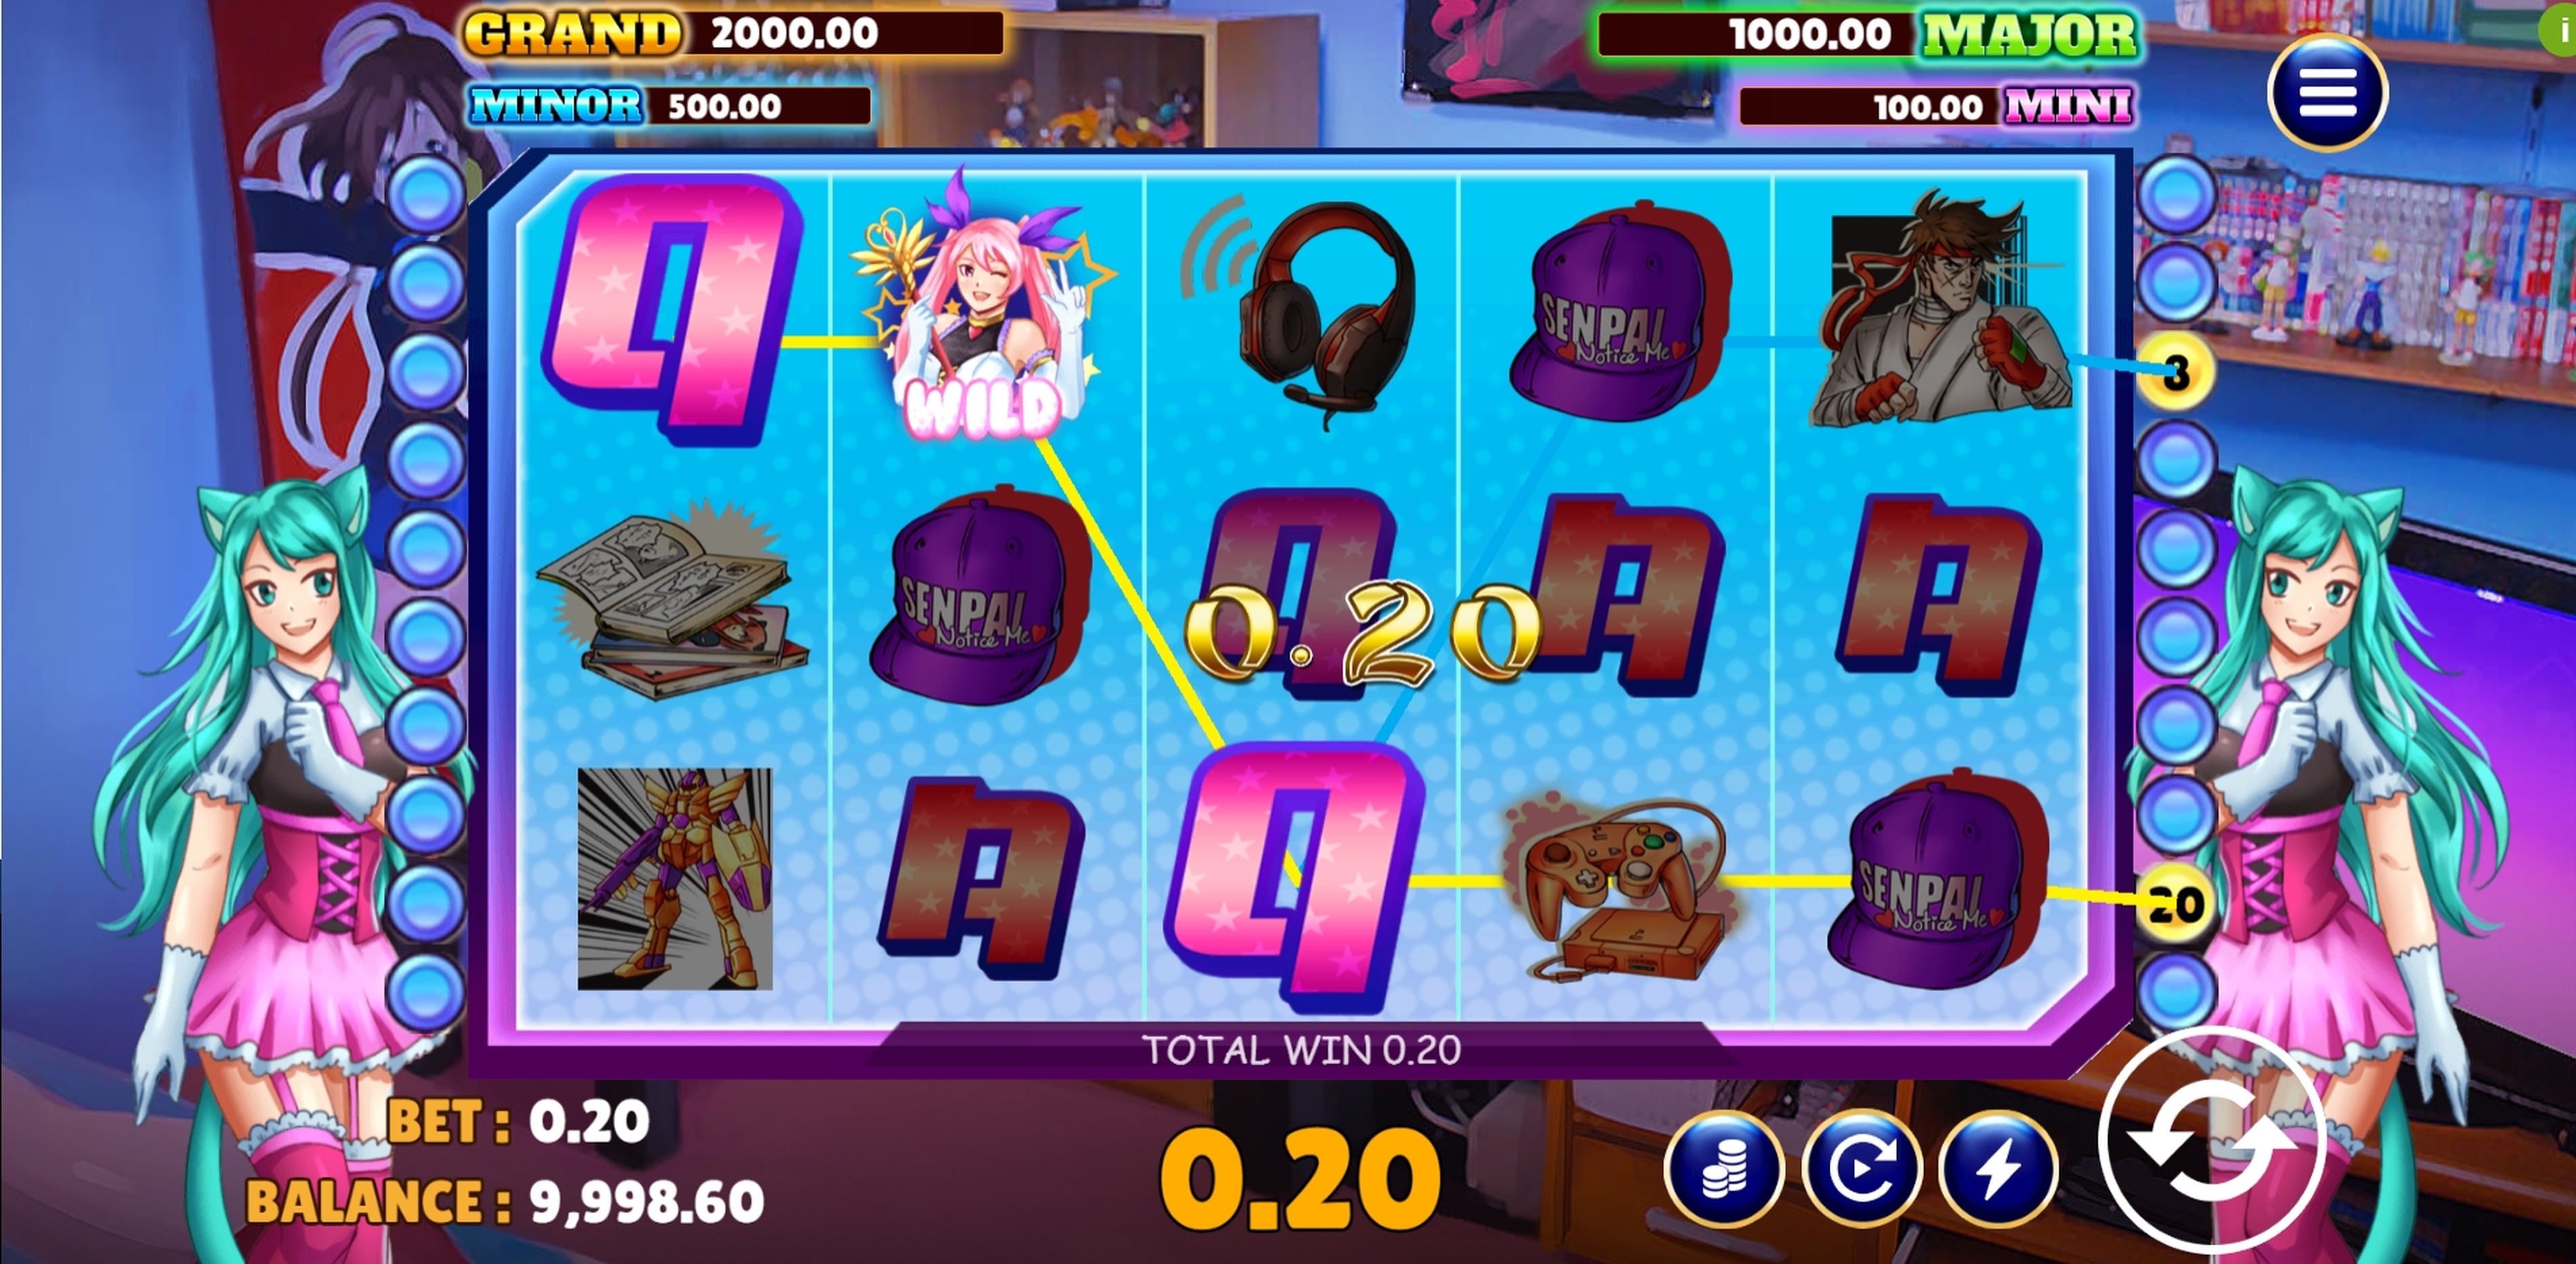 Win Money in Otaku's Heaven Free Slot Game by Vela Gaming